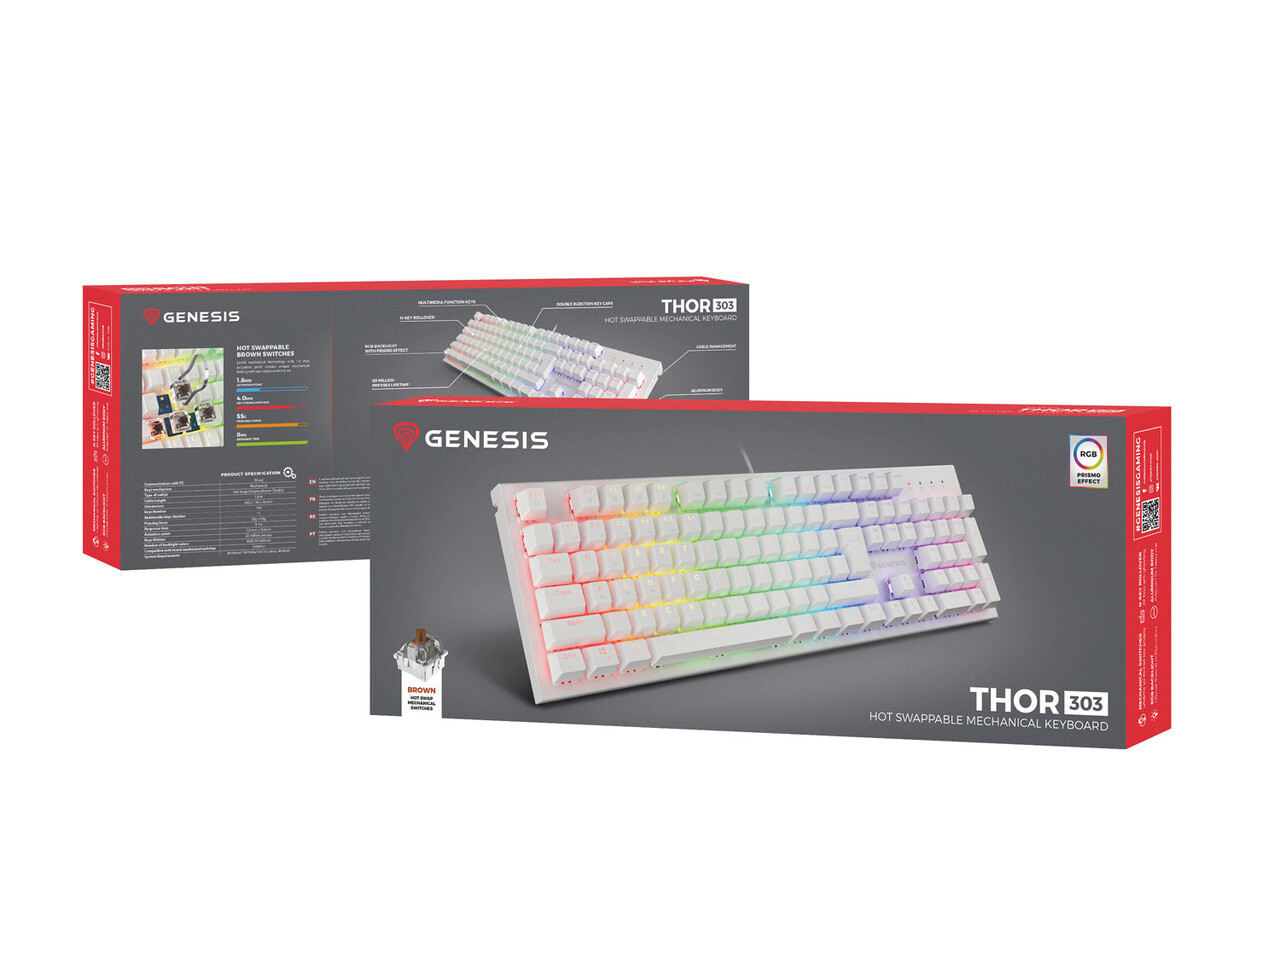 Genesis Announces Thor 303 RGB and TKL Keyboards